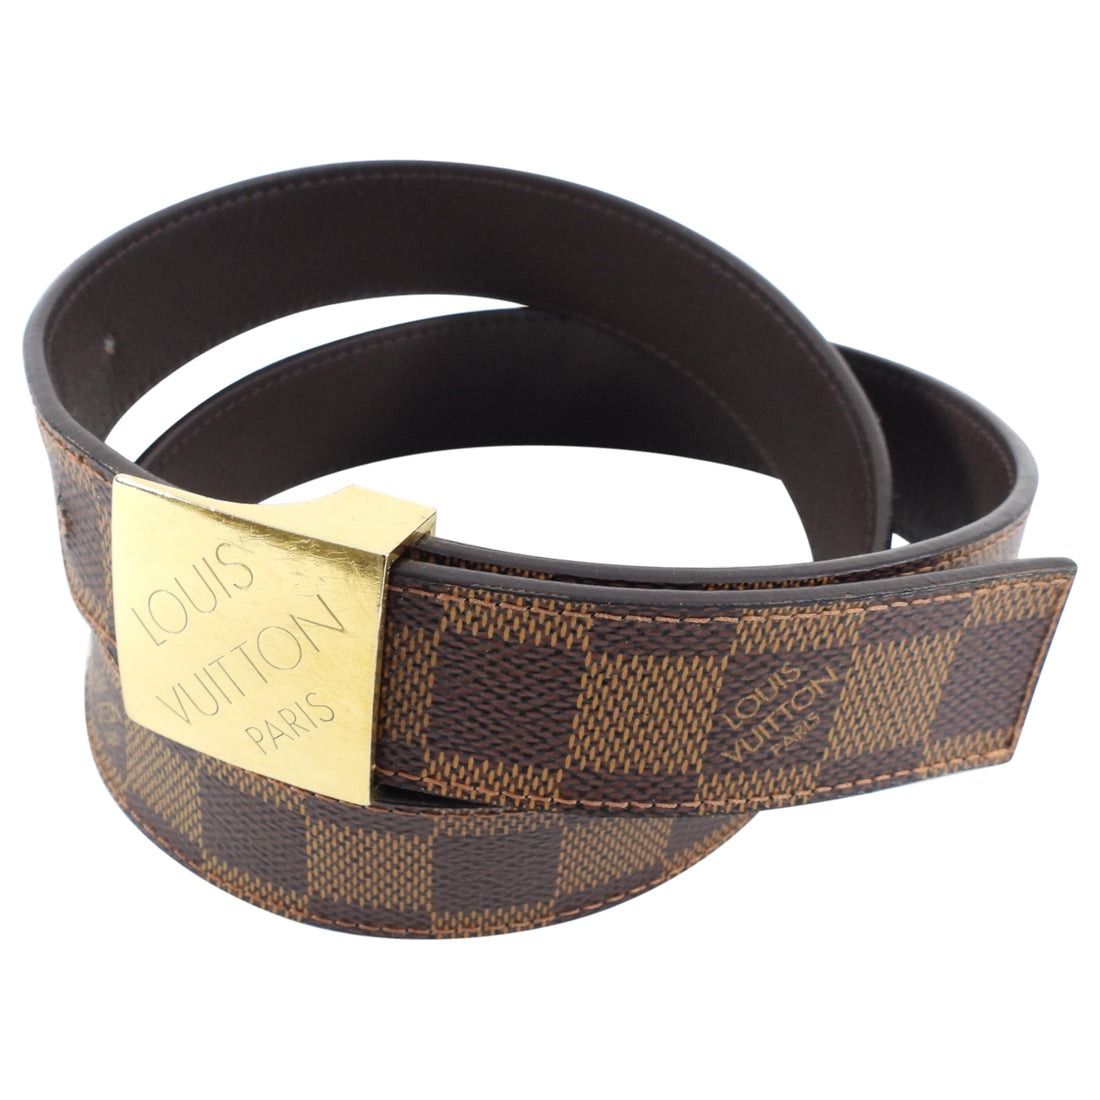 Shop authentic Louis Vuitton Damier Infini Leather Belt at revogue for just  USD 50000